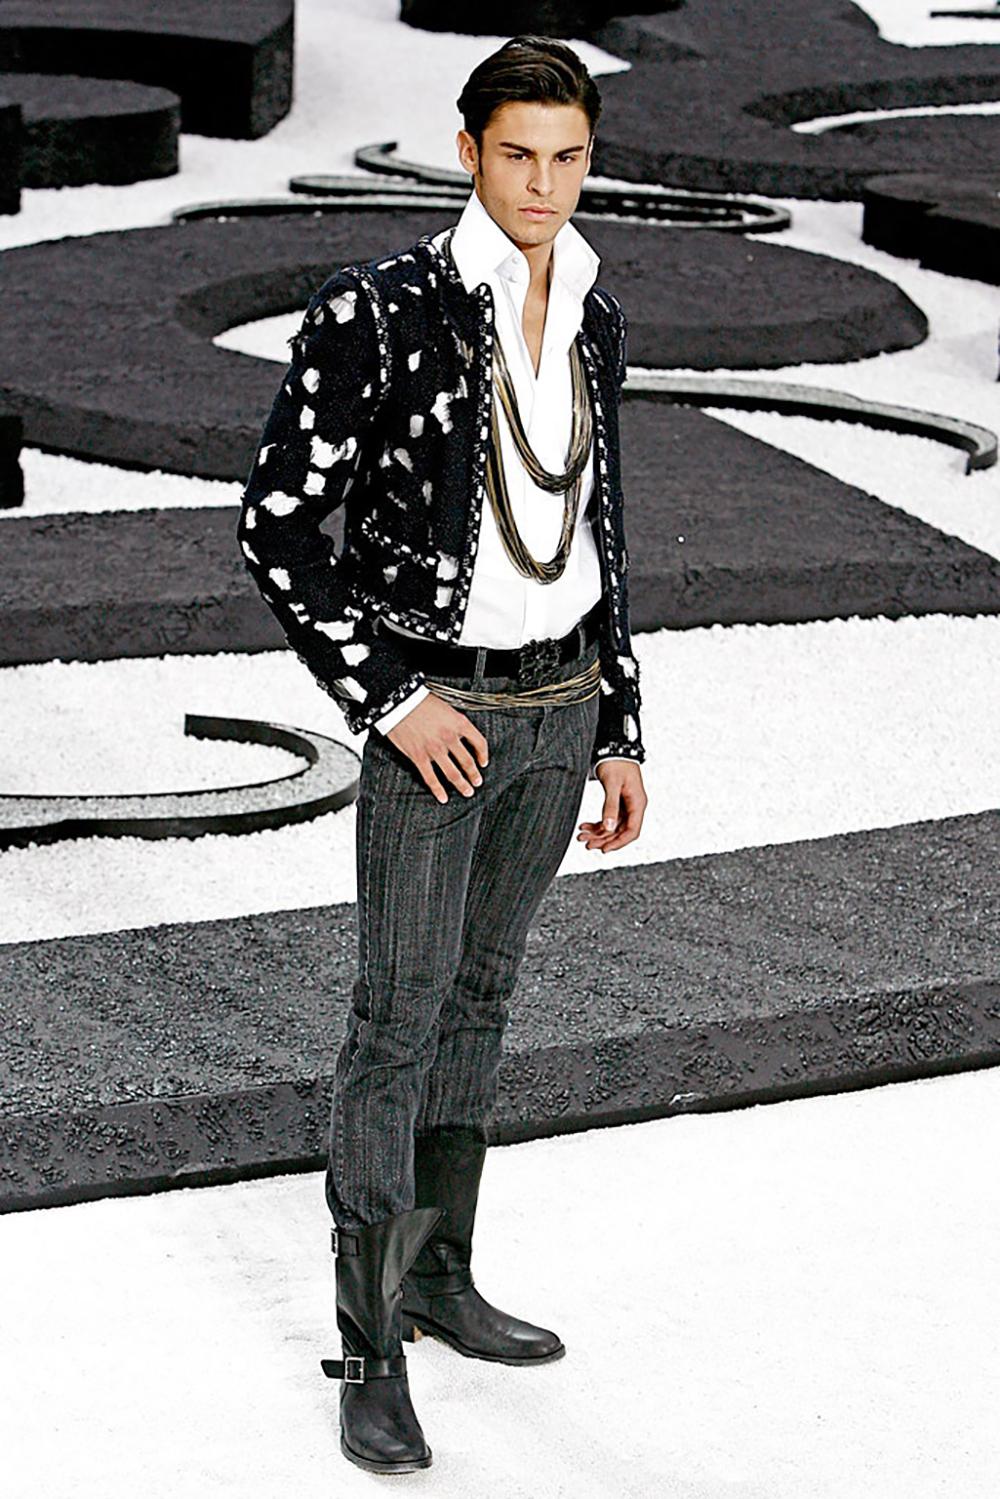 Chanel Iconic Metropolitan Museum Tweed Jacket For Sale 12